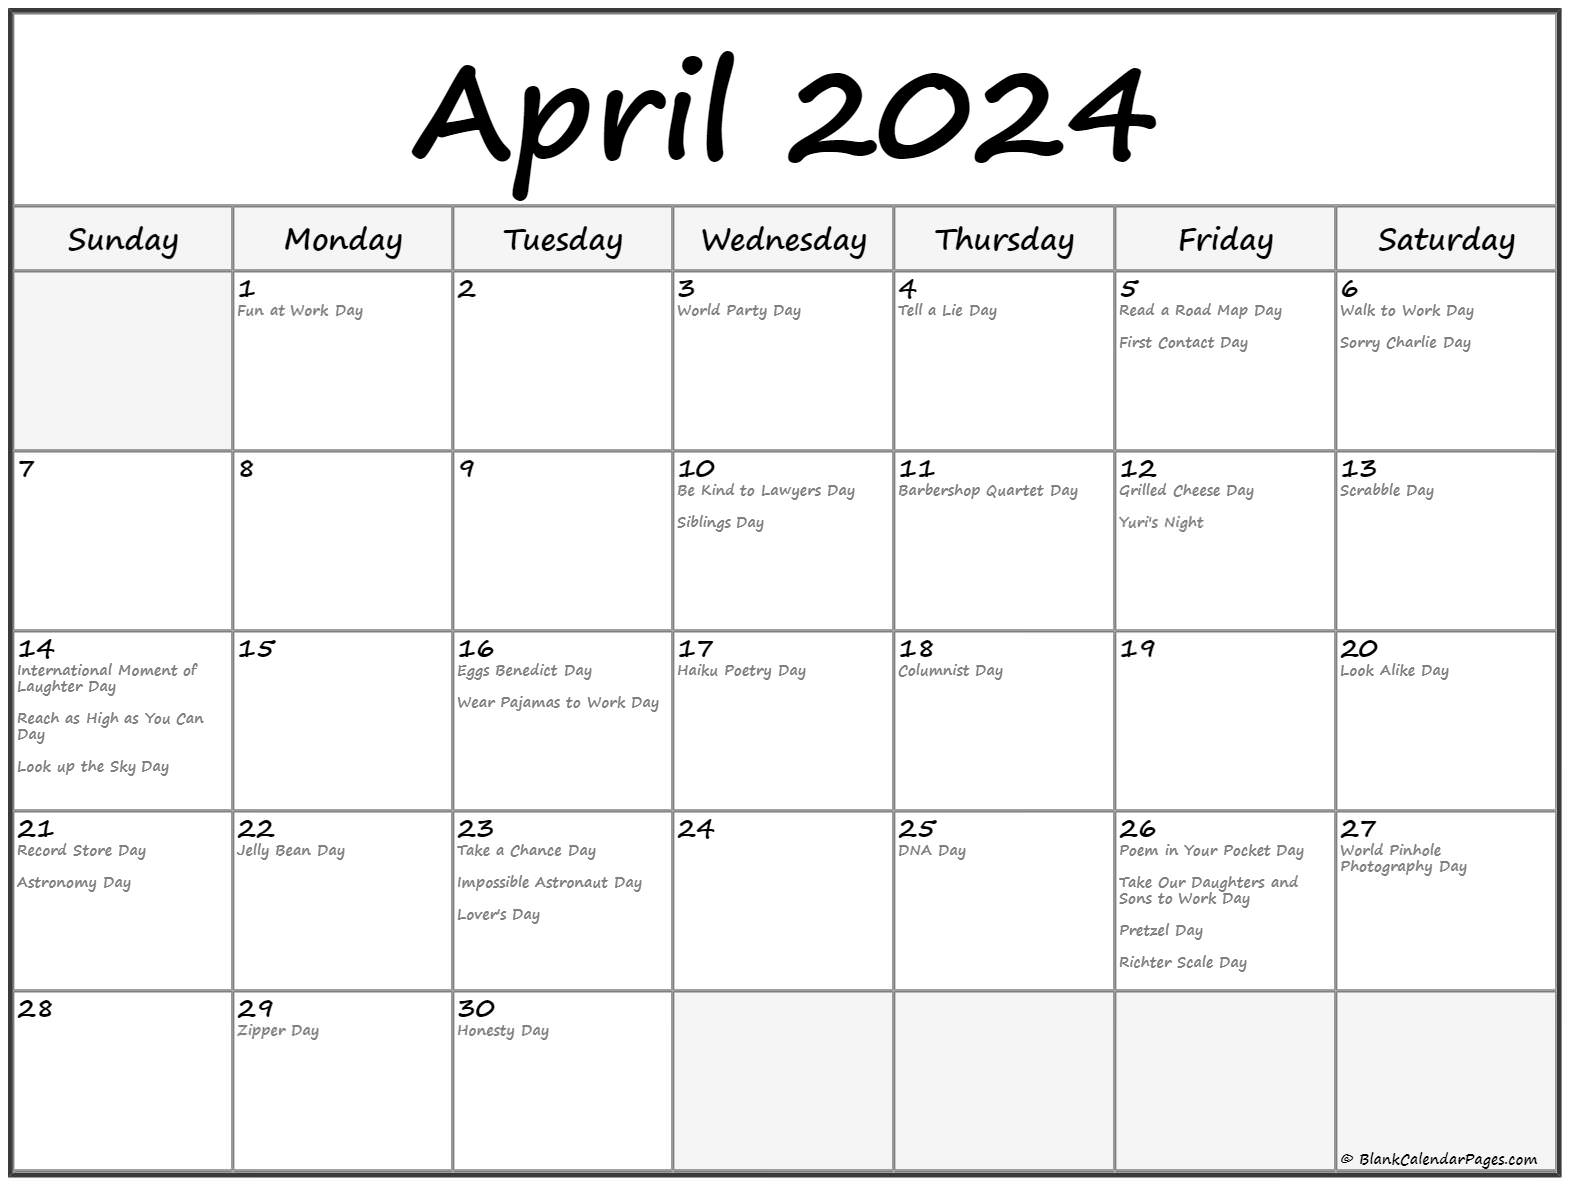 April 2024 With Holidays Calendar within National Day Calendar April 2024